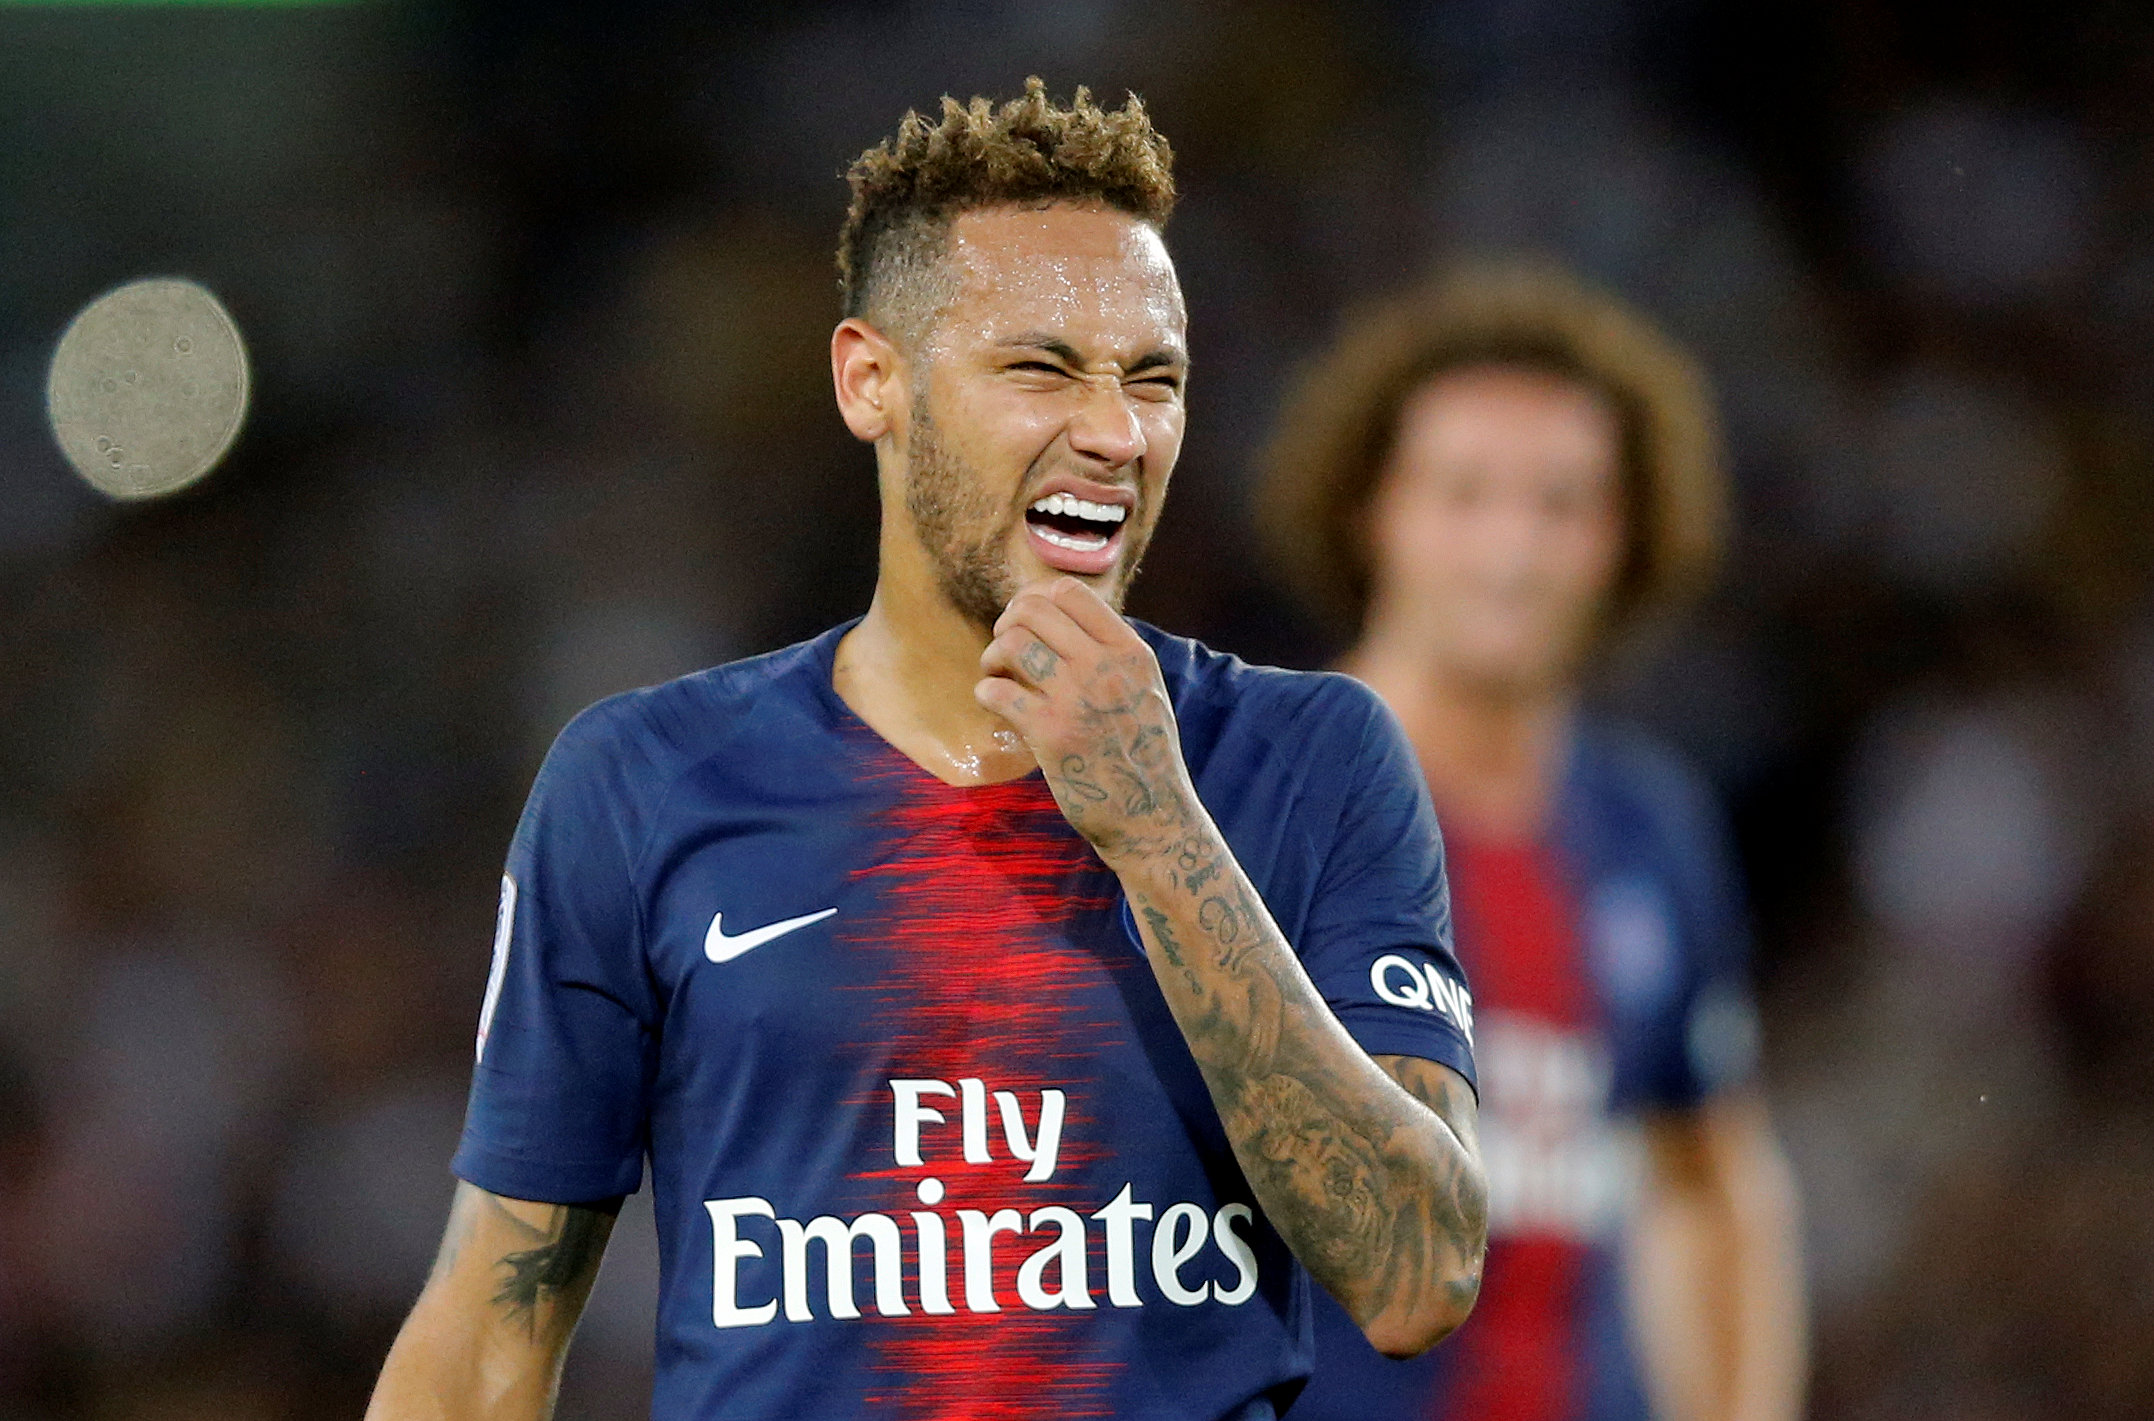 Football: Neymar strikes as PSG seal win over Caen